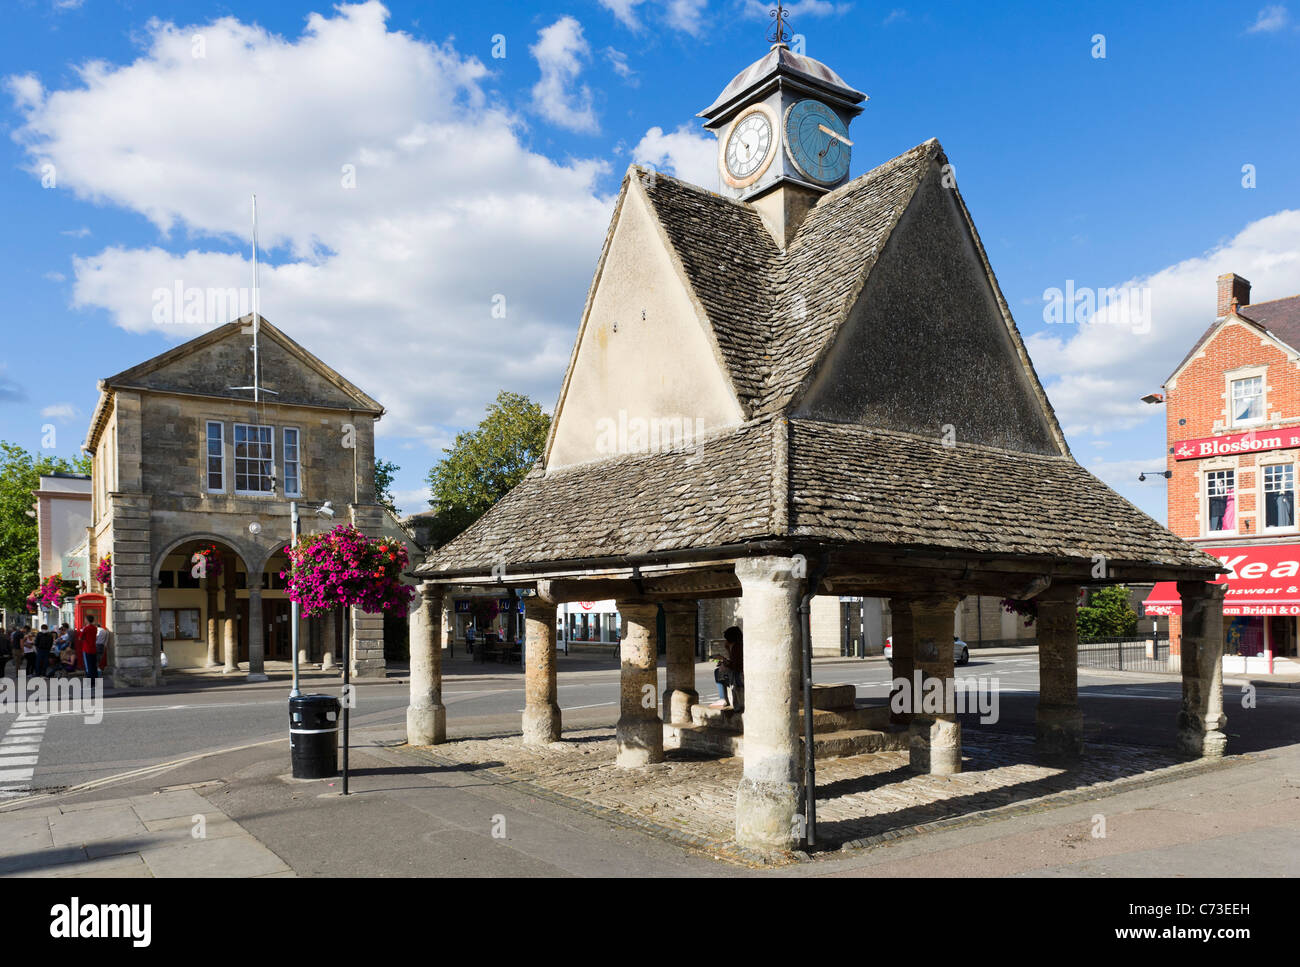 La Buttercross en Market Square en el centro de Witney, Oxfordshire, Inglaterra, Reino Unido. Foto de stock